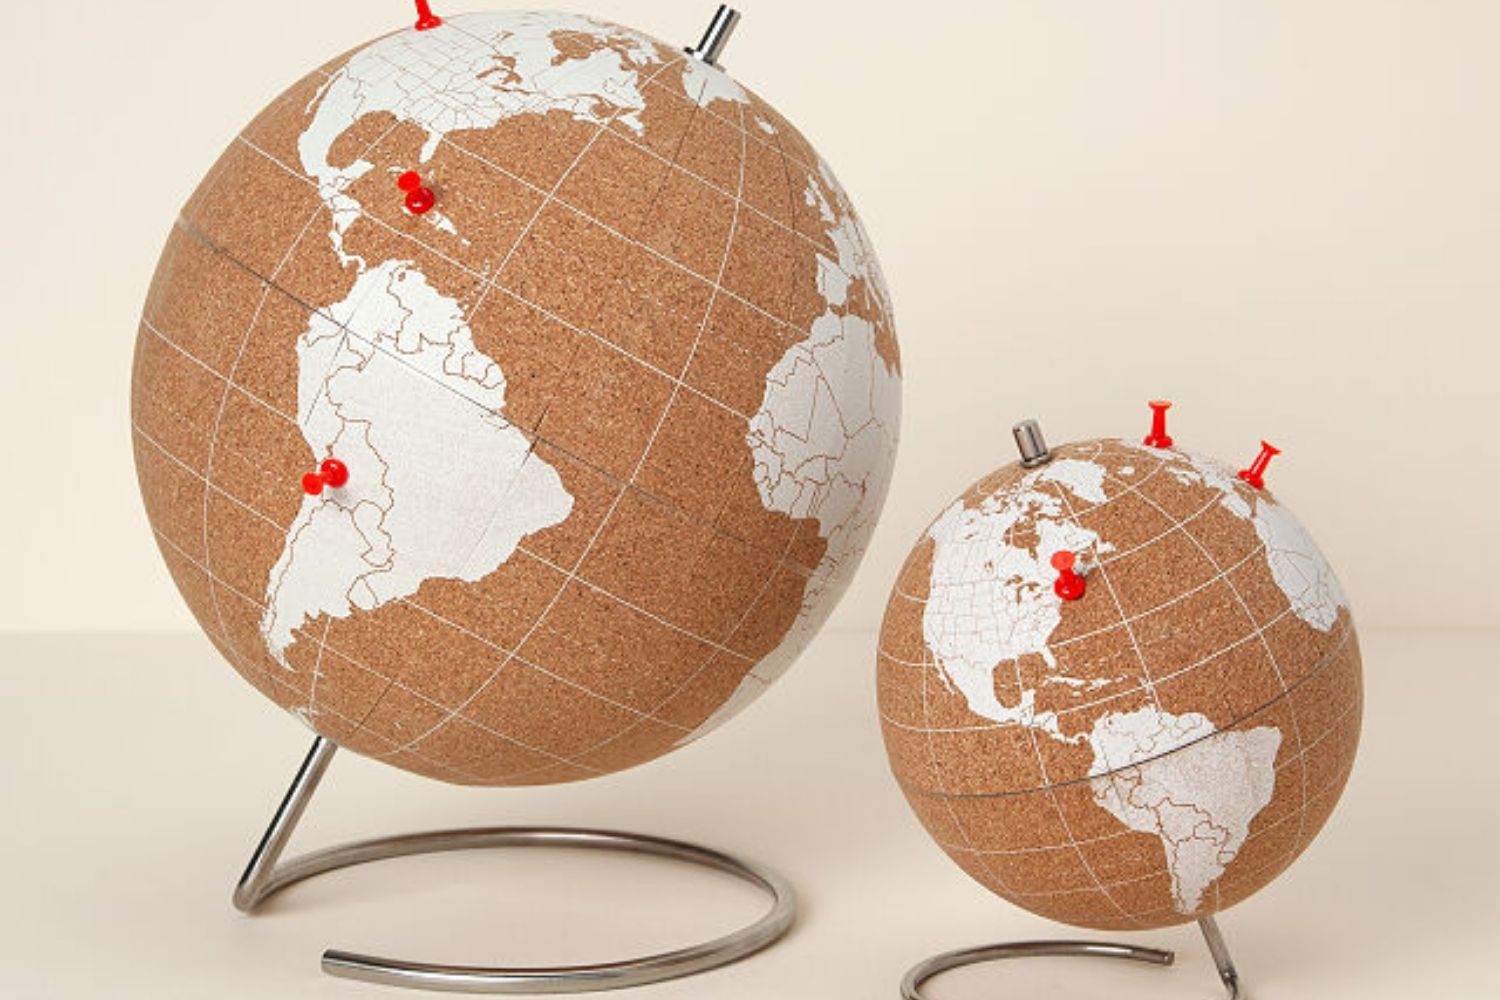 The Best Travel Gifts Option: World Traveler’s Cork Globe